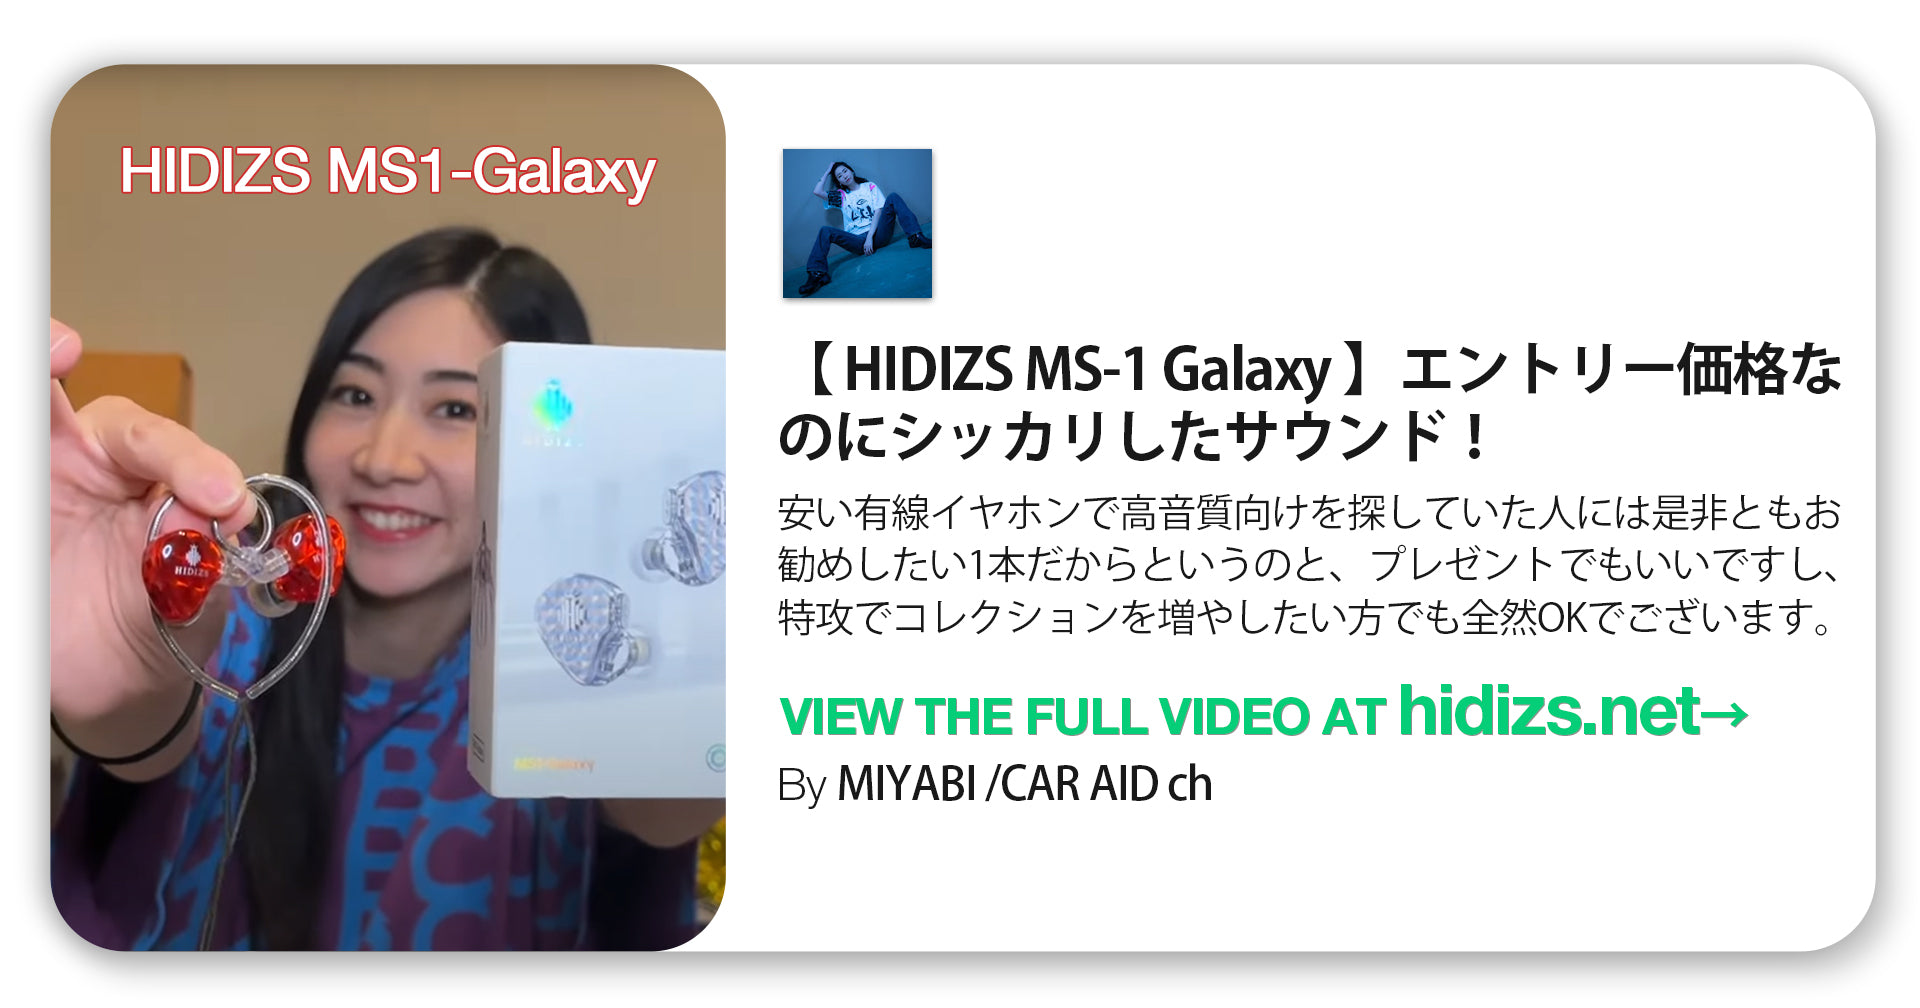 Hidizs MS1-Galaxy Review - MIYABI /CAR AID ch